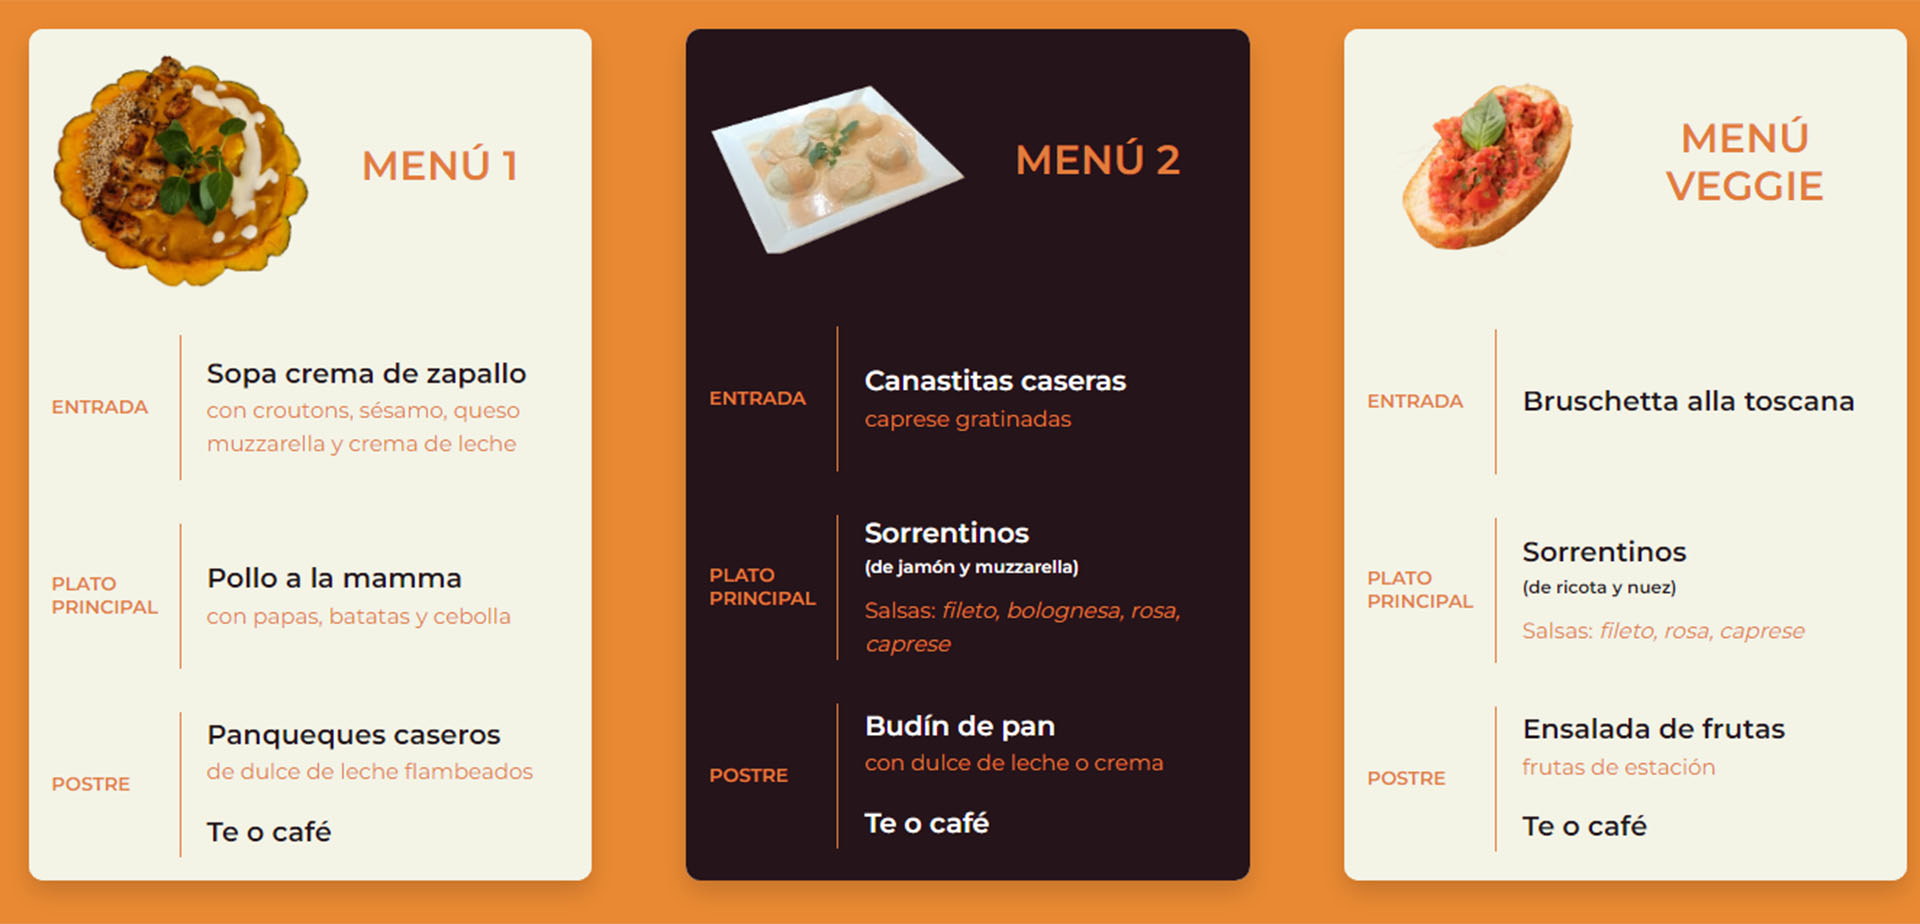 Guido Süller's restaurant will offer three menus to choose from